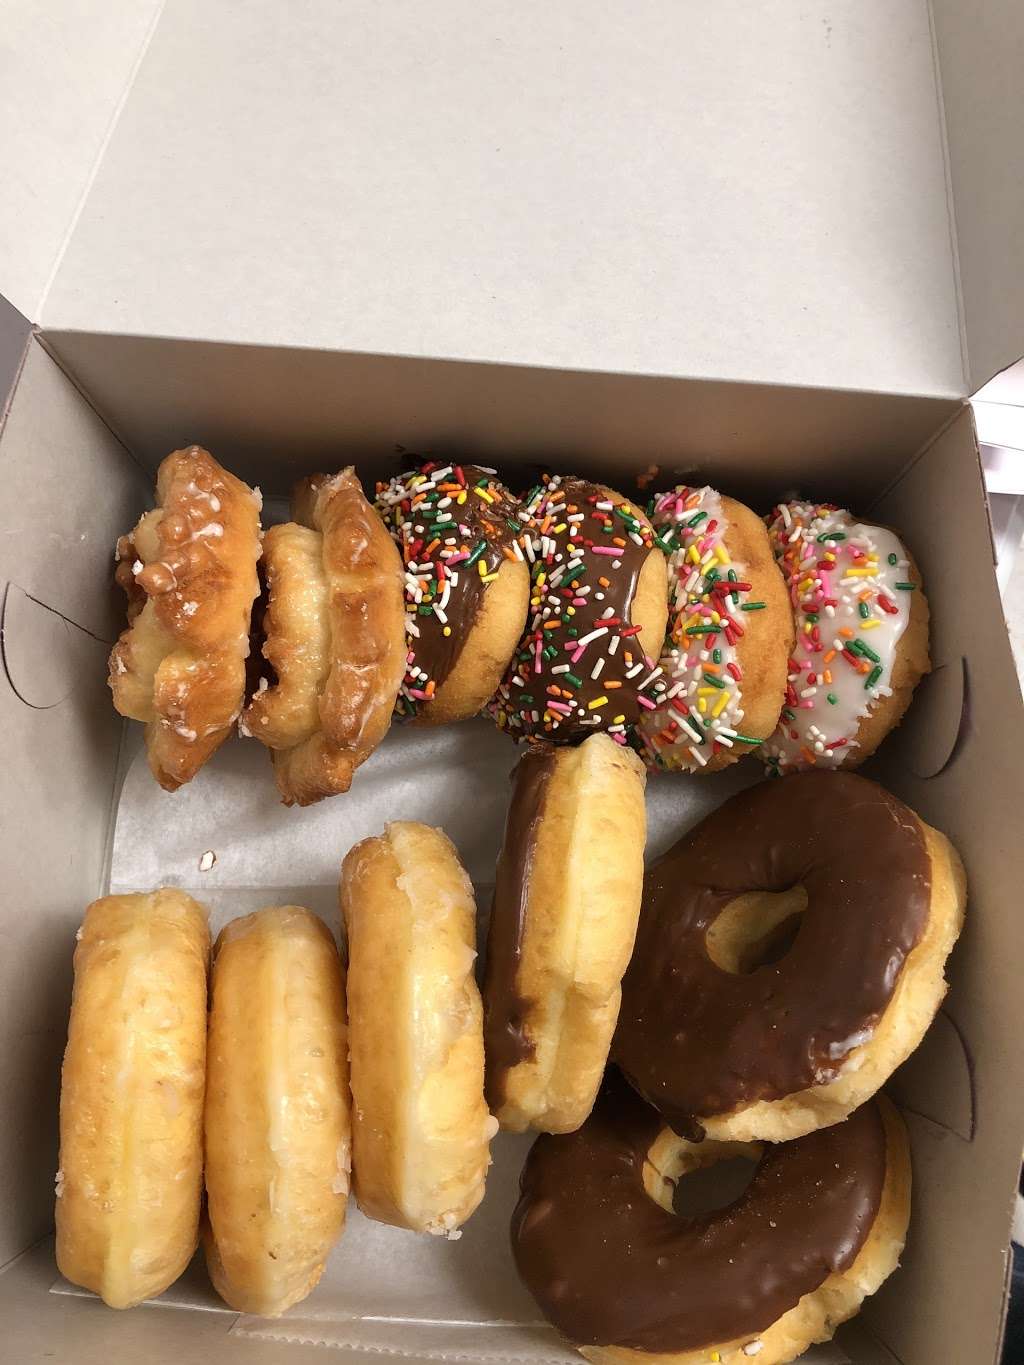 Giant Donuts - 2059 Main St, Oakley, CA 94561, USA - BusinessYab